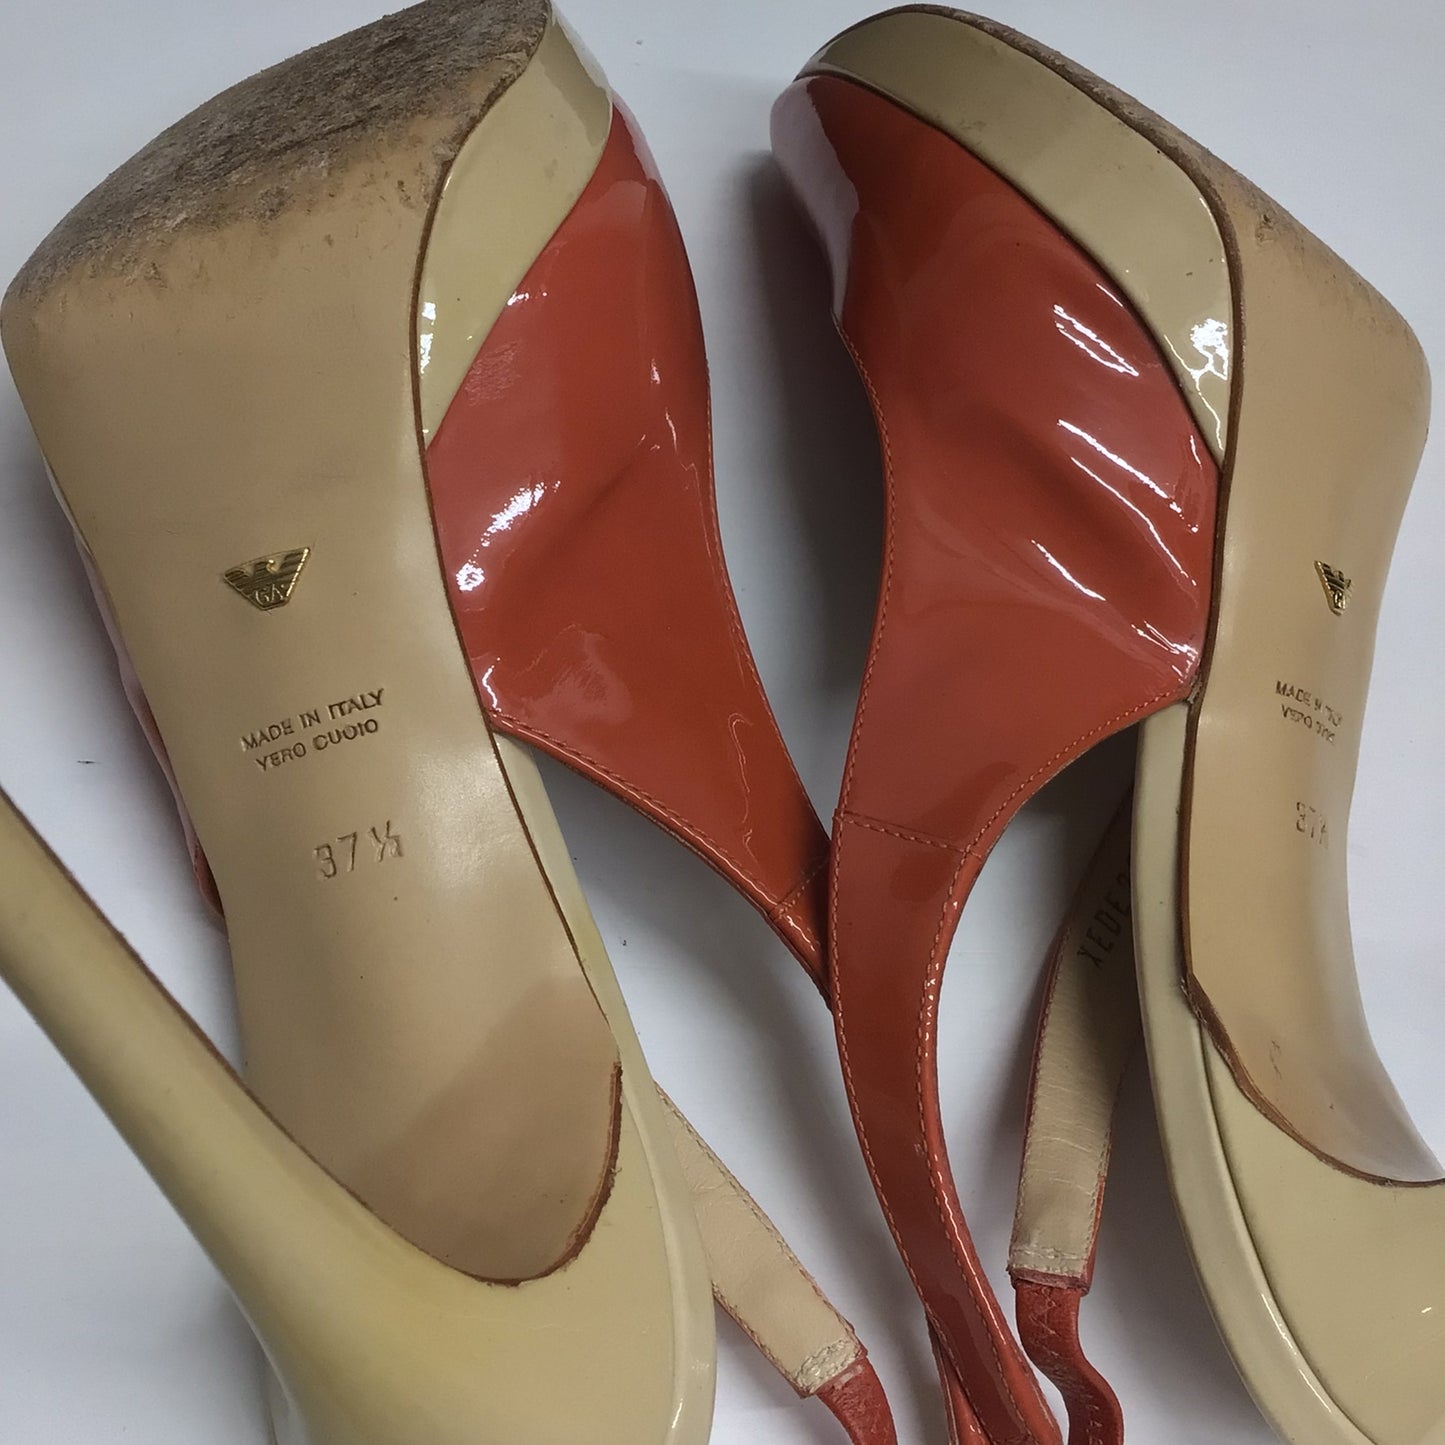 Emporio Armani Coral & Beige Sling Back High Stiletto Heels Size 5 UK (37.5 EU)